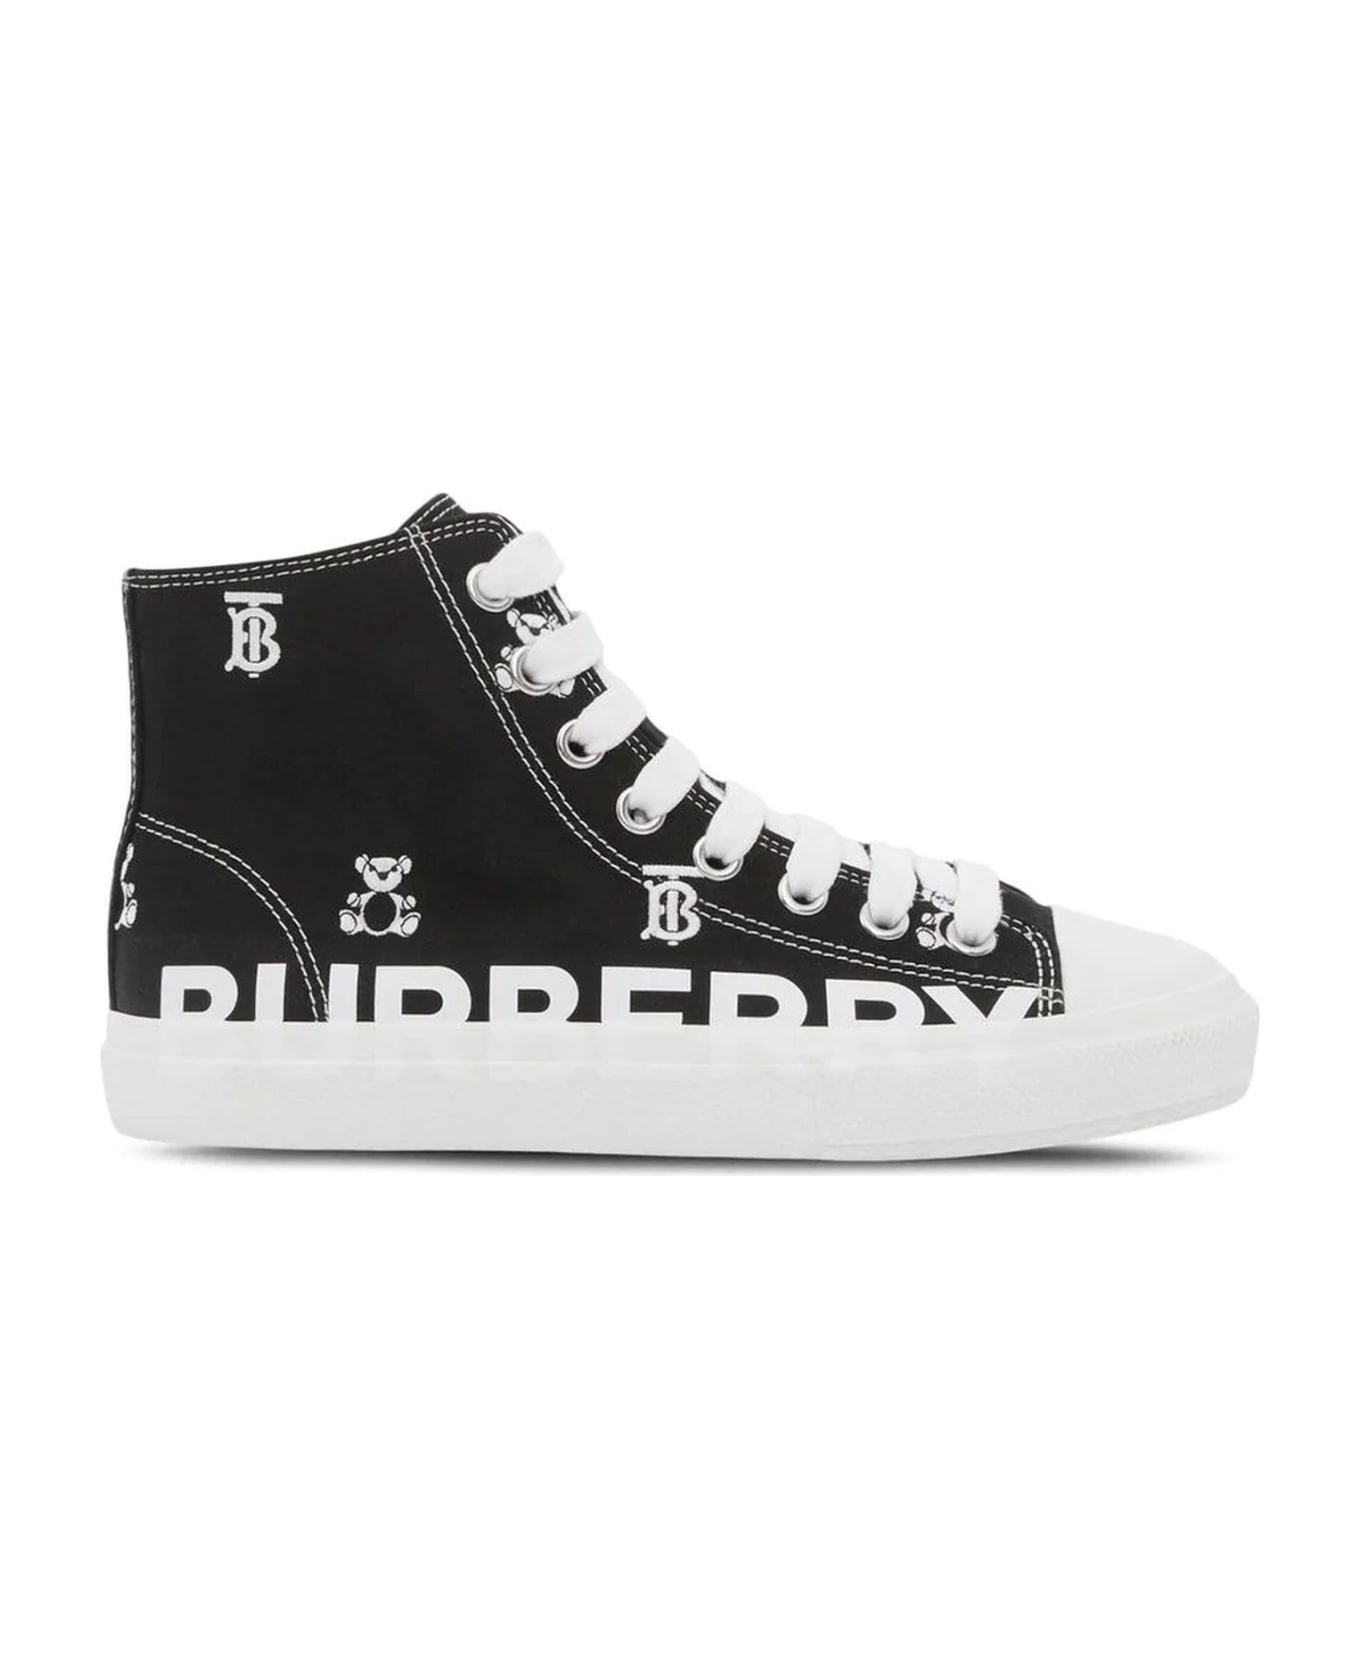 Burberry Black Fabric Sneakers - Nero